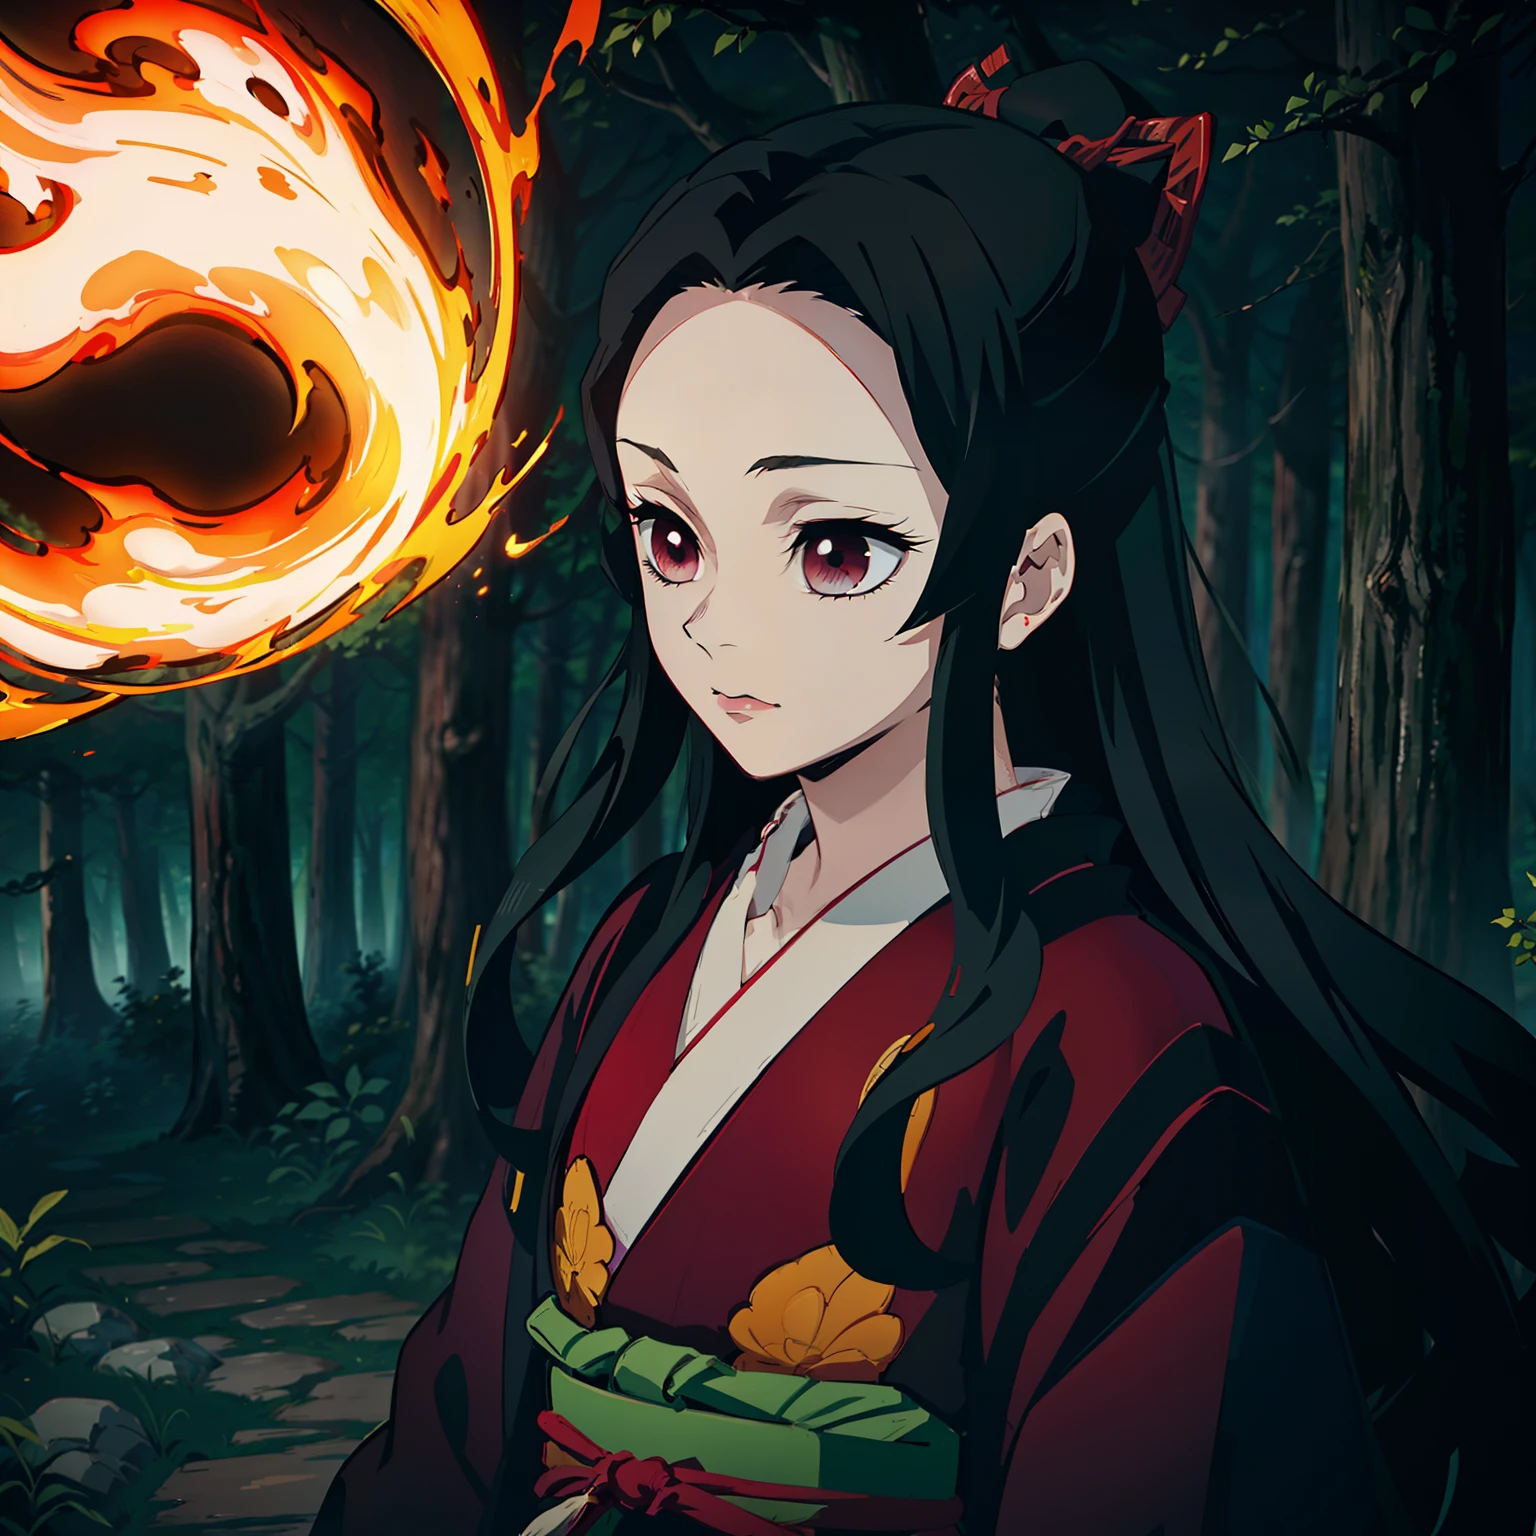 Kimetsu no Yaiba style, 여자 1명, 독주, 검은 눈, 주홍색 머리카락, 매우 긴 머리, 빨간 기모노, 오비 벨트,  ((걸작)), ((의 초상화)), 숲이 불타고 있다, 숲은 타오르고 있다